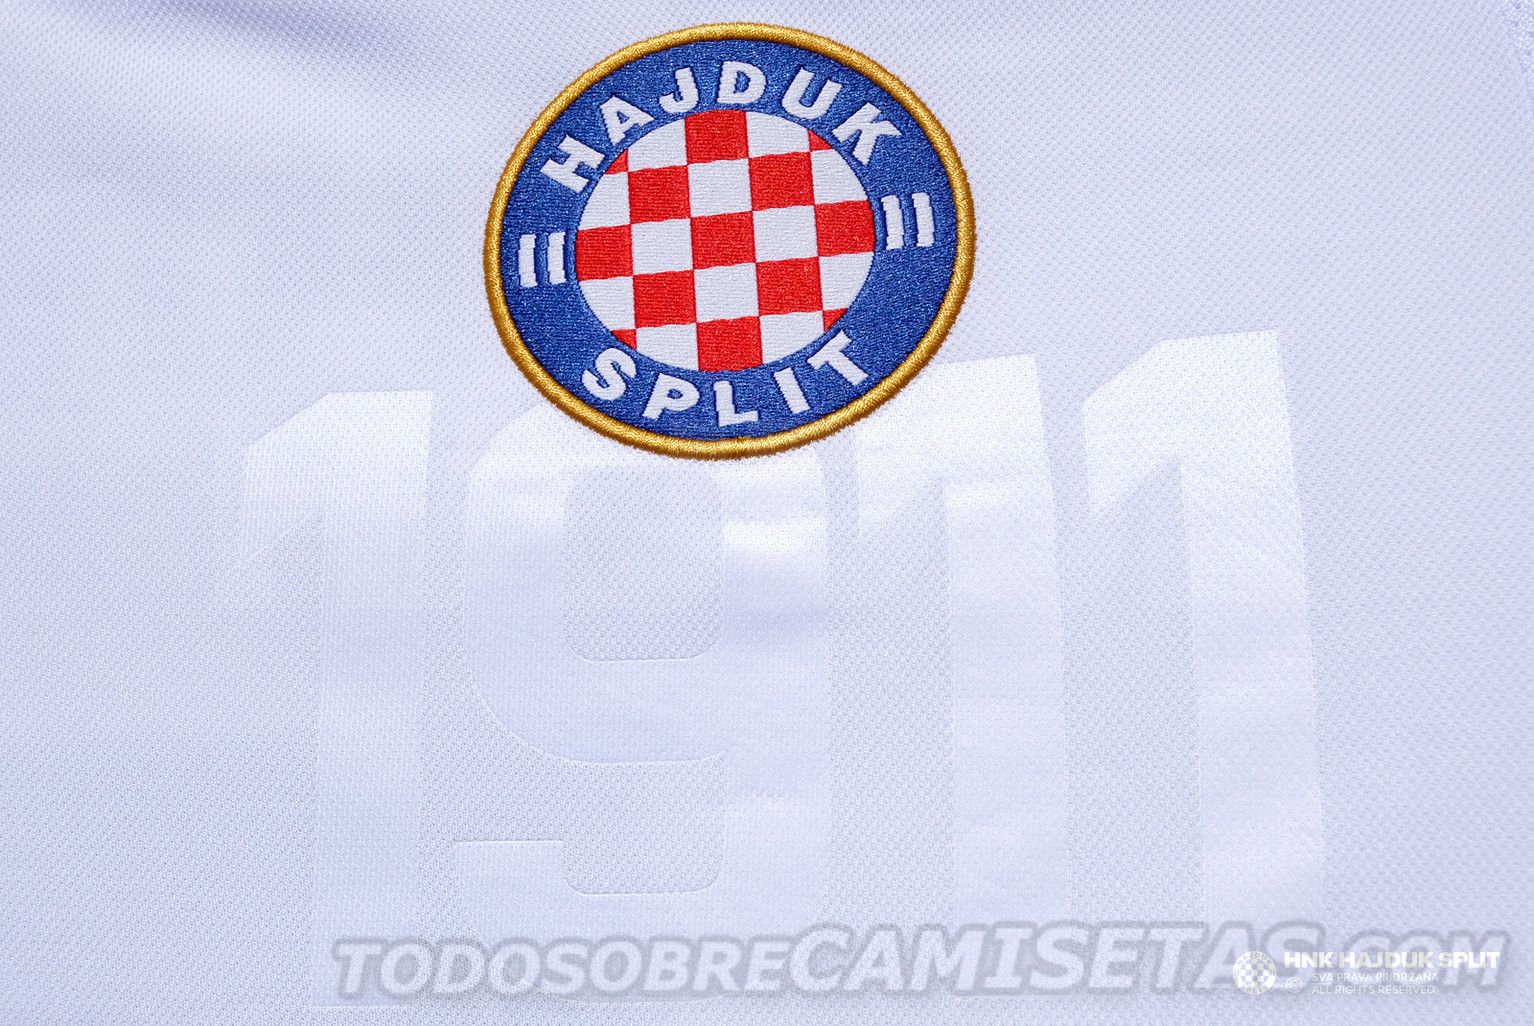 HNK Hajduk Split Macron Home Kit 2018-20